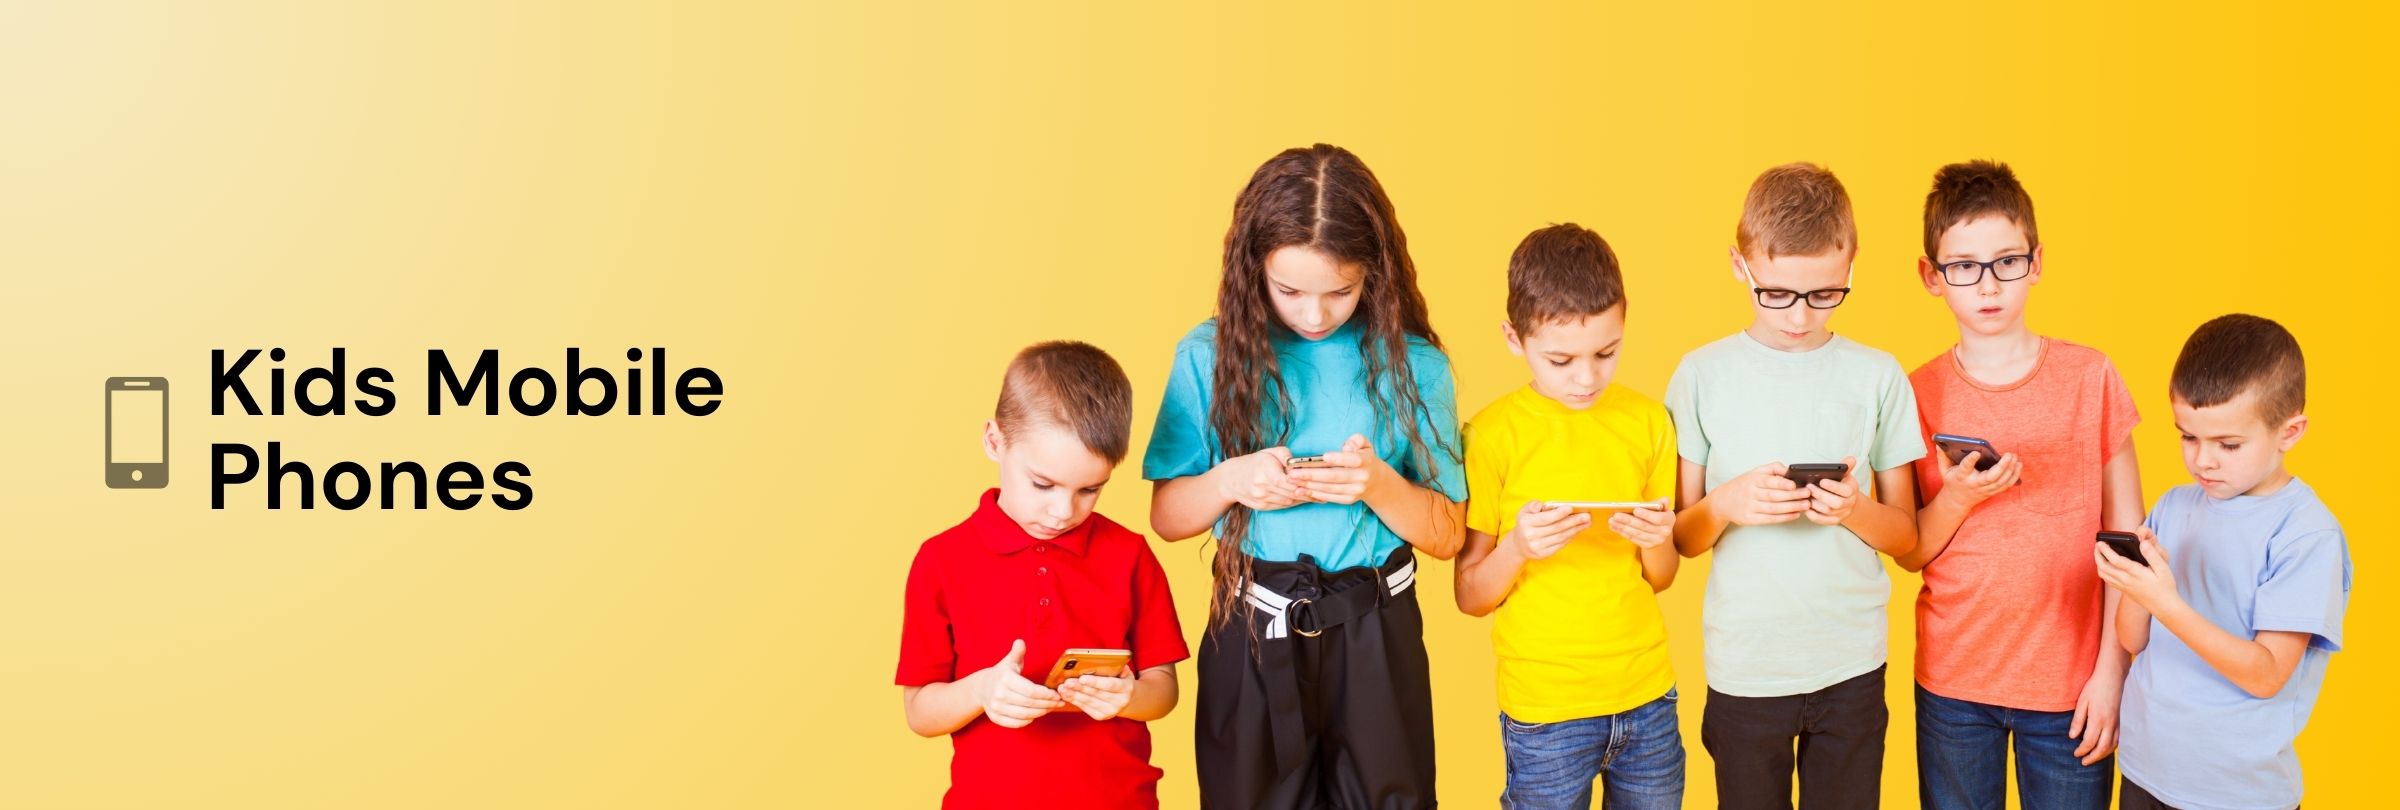 Kids Mobile Phones